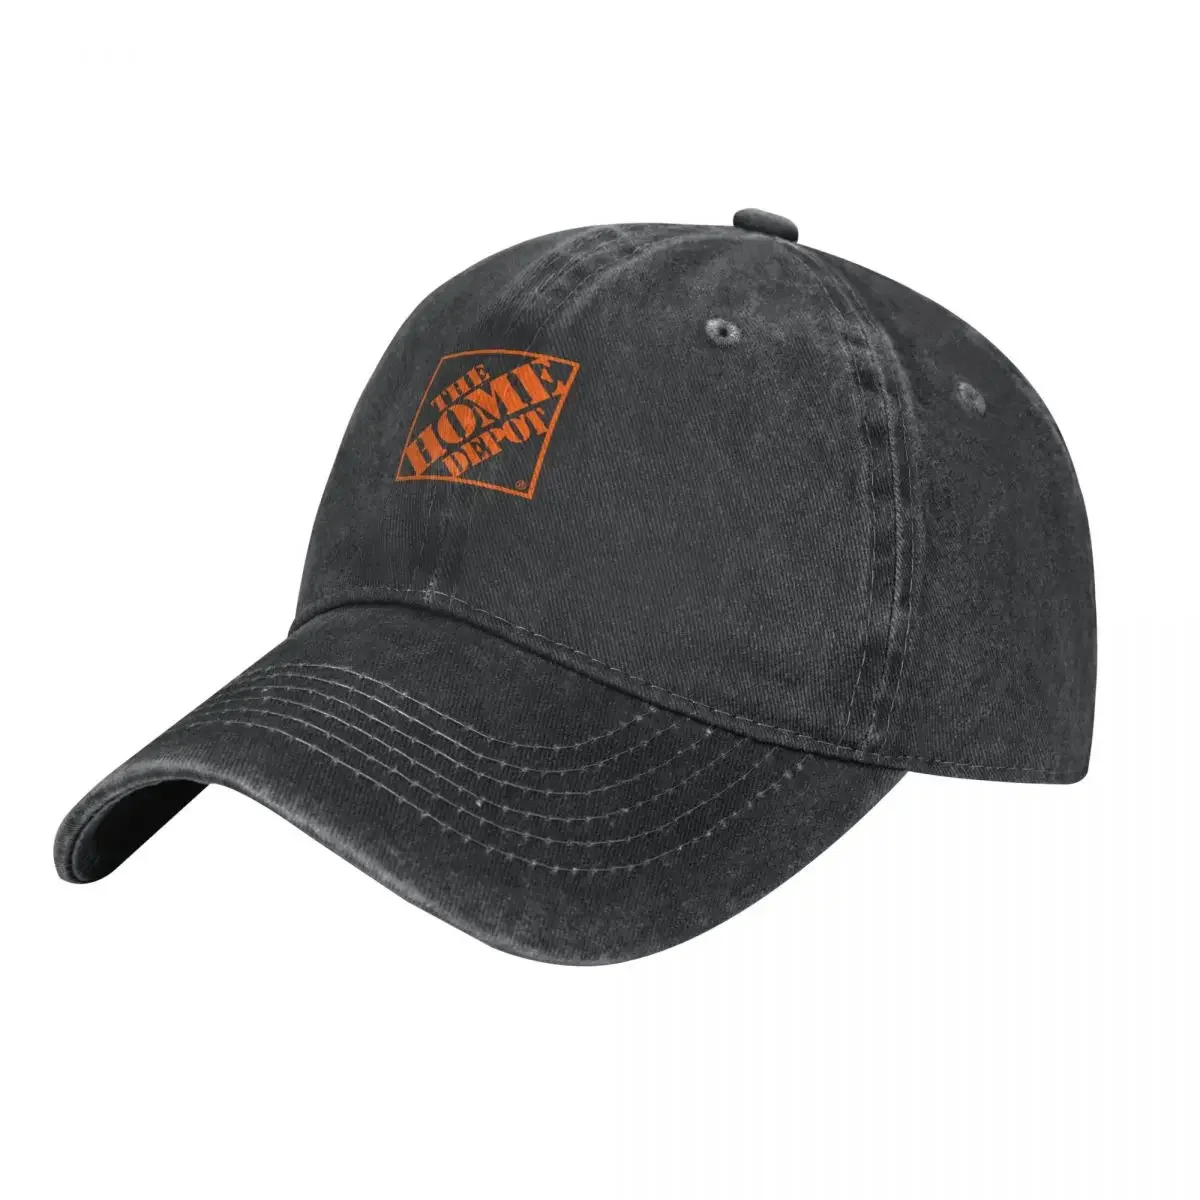 

BEST SELLER Home Depot Merchandise Essential Copy Active T-Shirt Cowboy Hat Golf beach hat Gentleman Hat Mens Tennis Women's